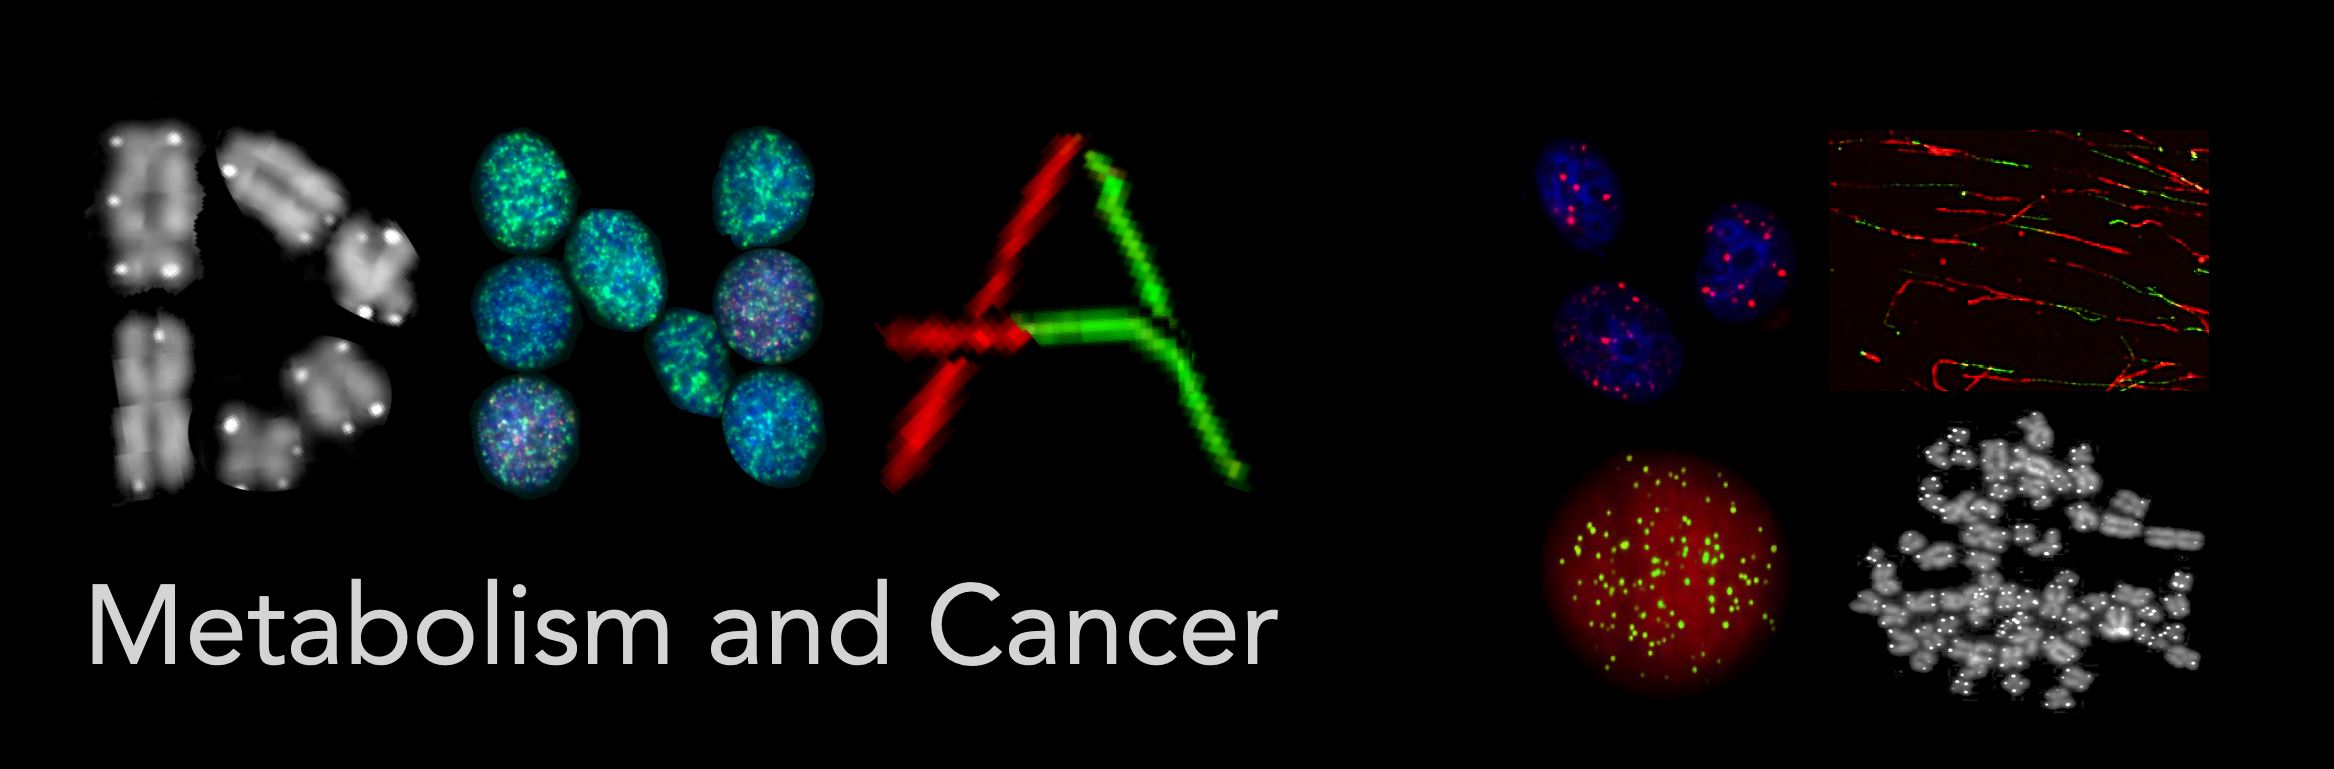 DNA Metabolism and Cancer